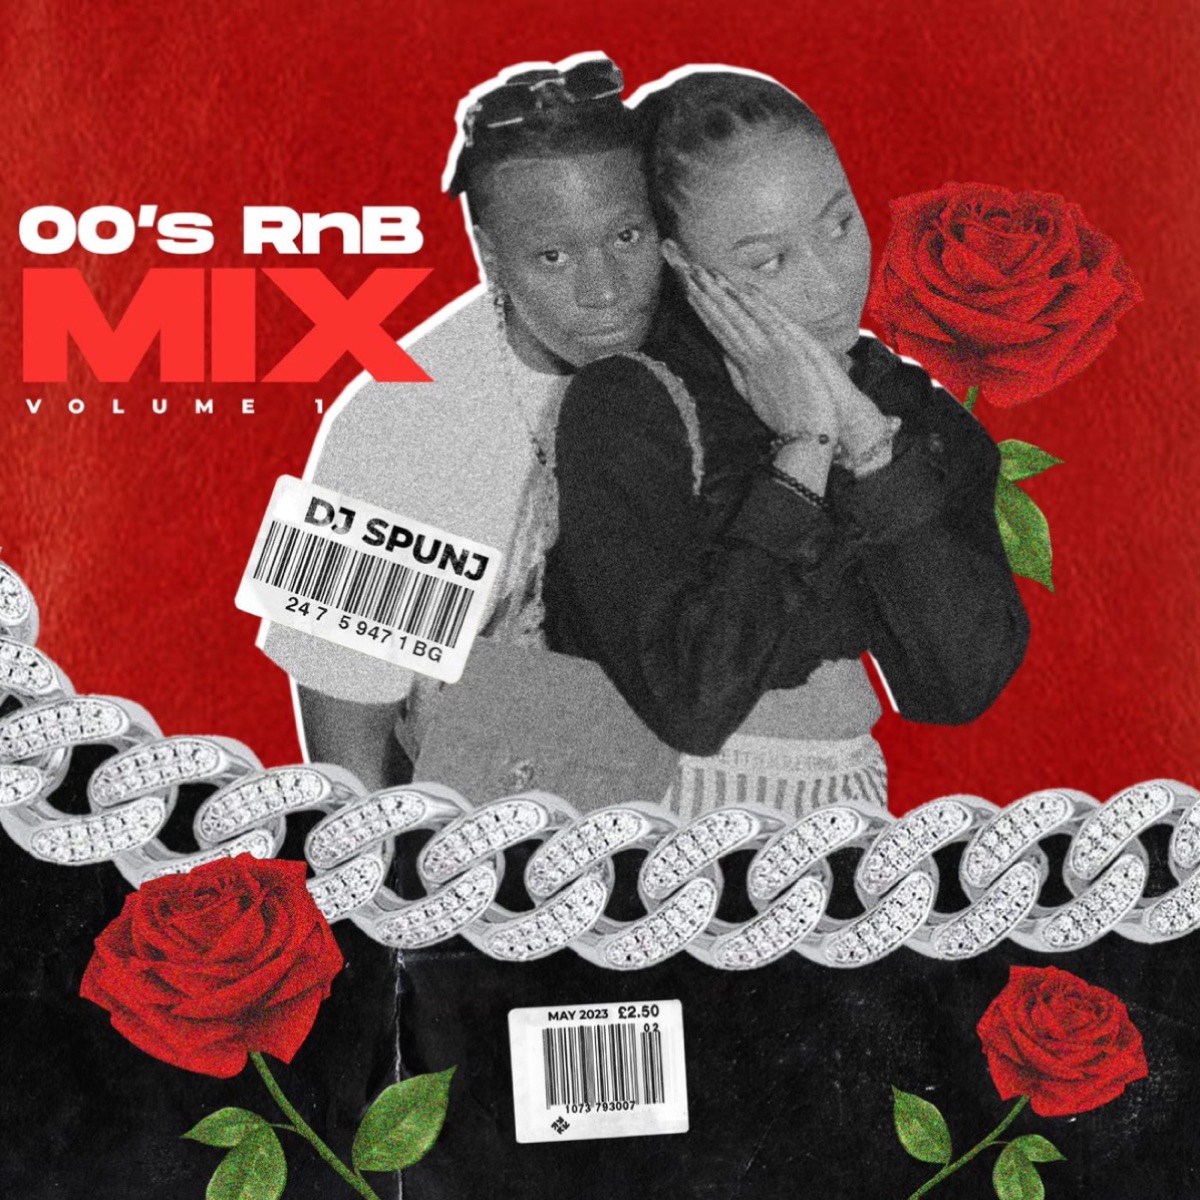 00's RnB, Vol. 1 (DJ Mix) - Album by DJ Spunj - Apple Music